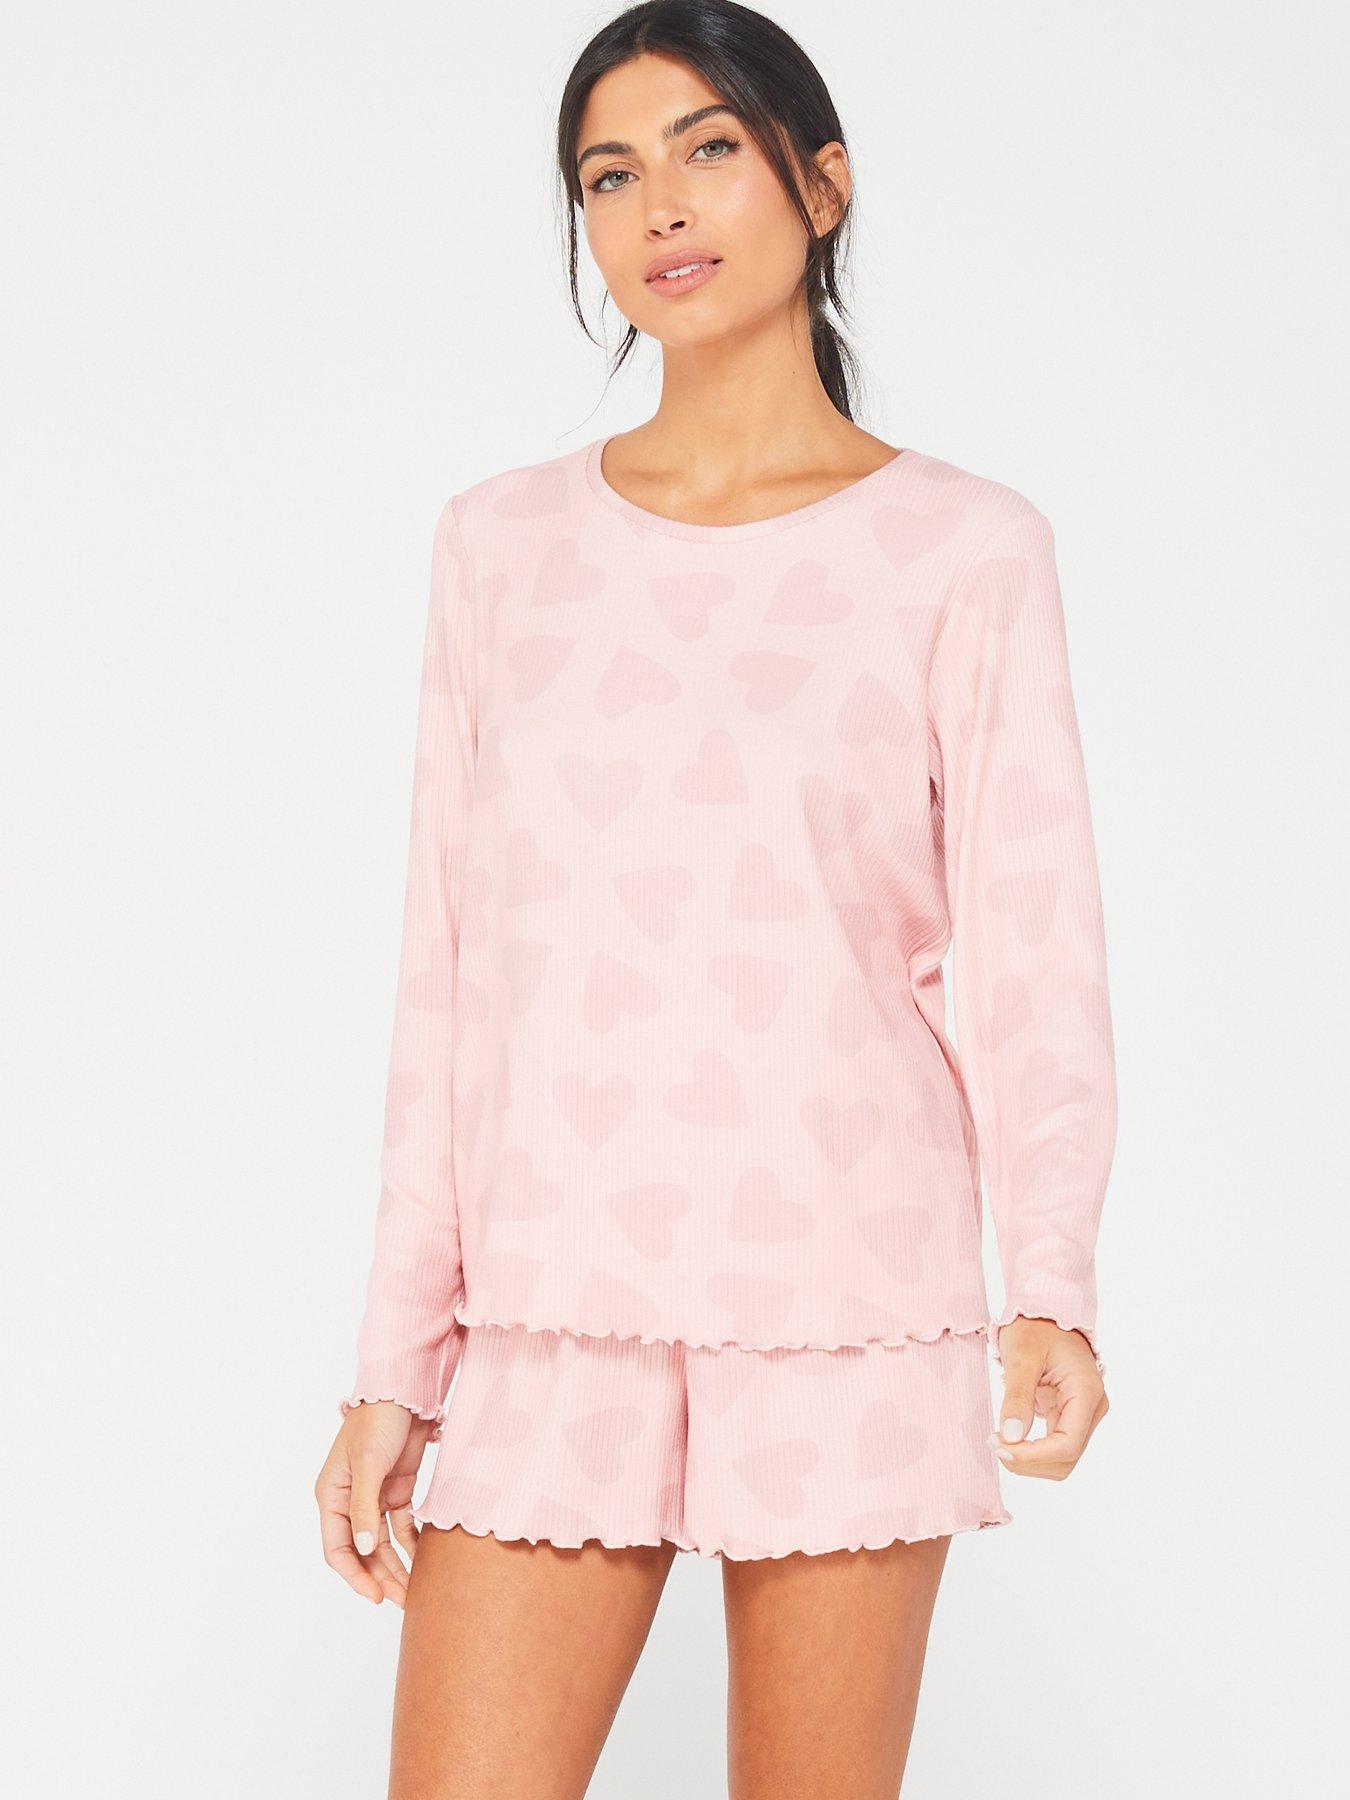 Dreaming Of Love Pink & Black Hearts Pajamas, Fast Shipping